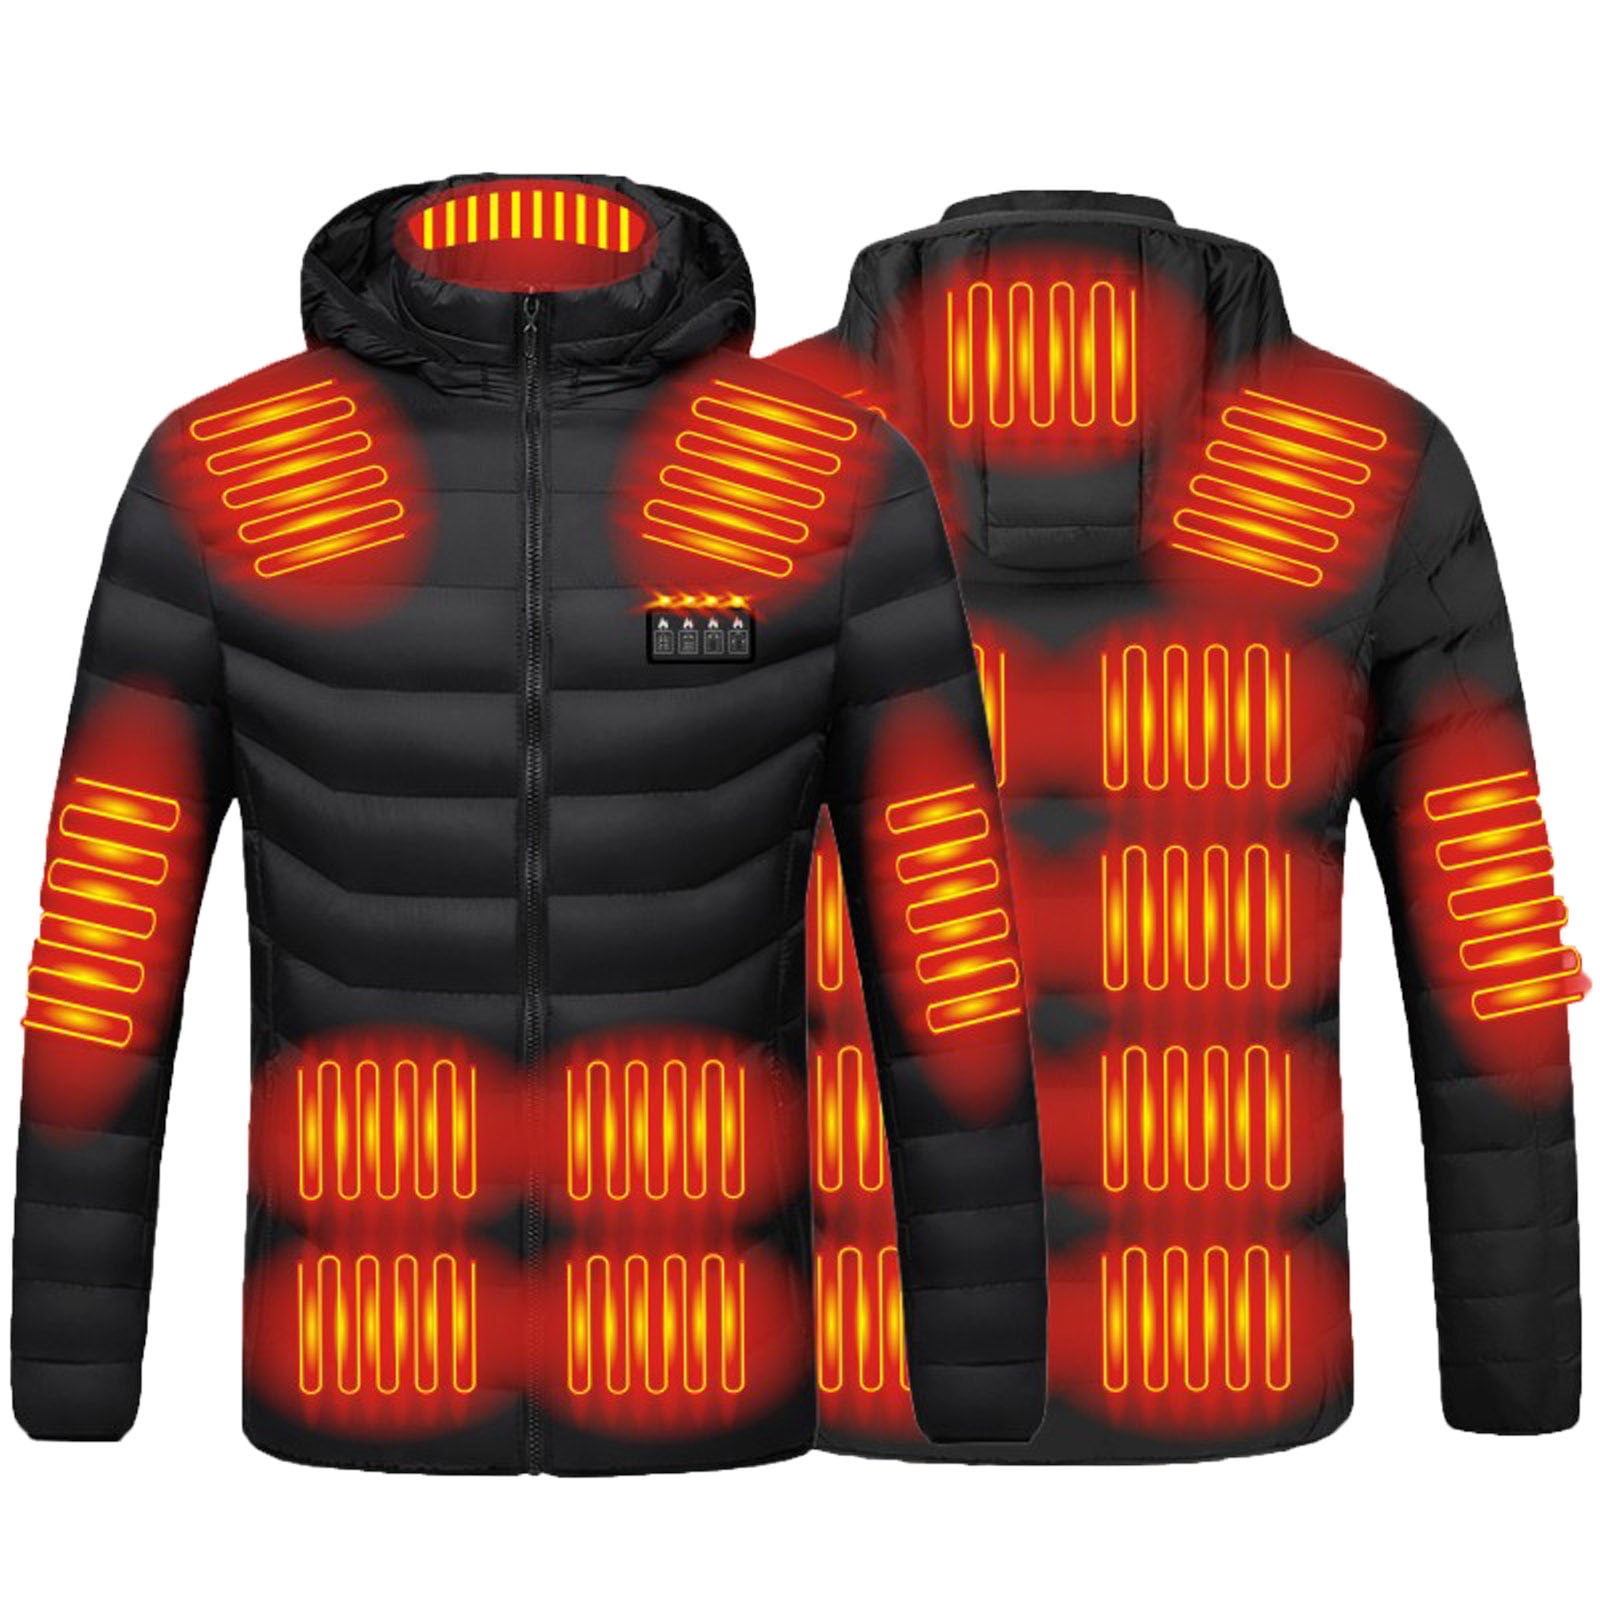 TIANEK Men Coats & Jackets,Outdoor Warm Clothing Heated For Riding Skiing  Fishing Charging Via Heated Coat 